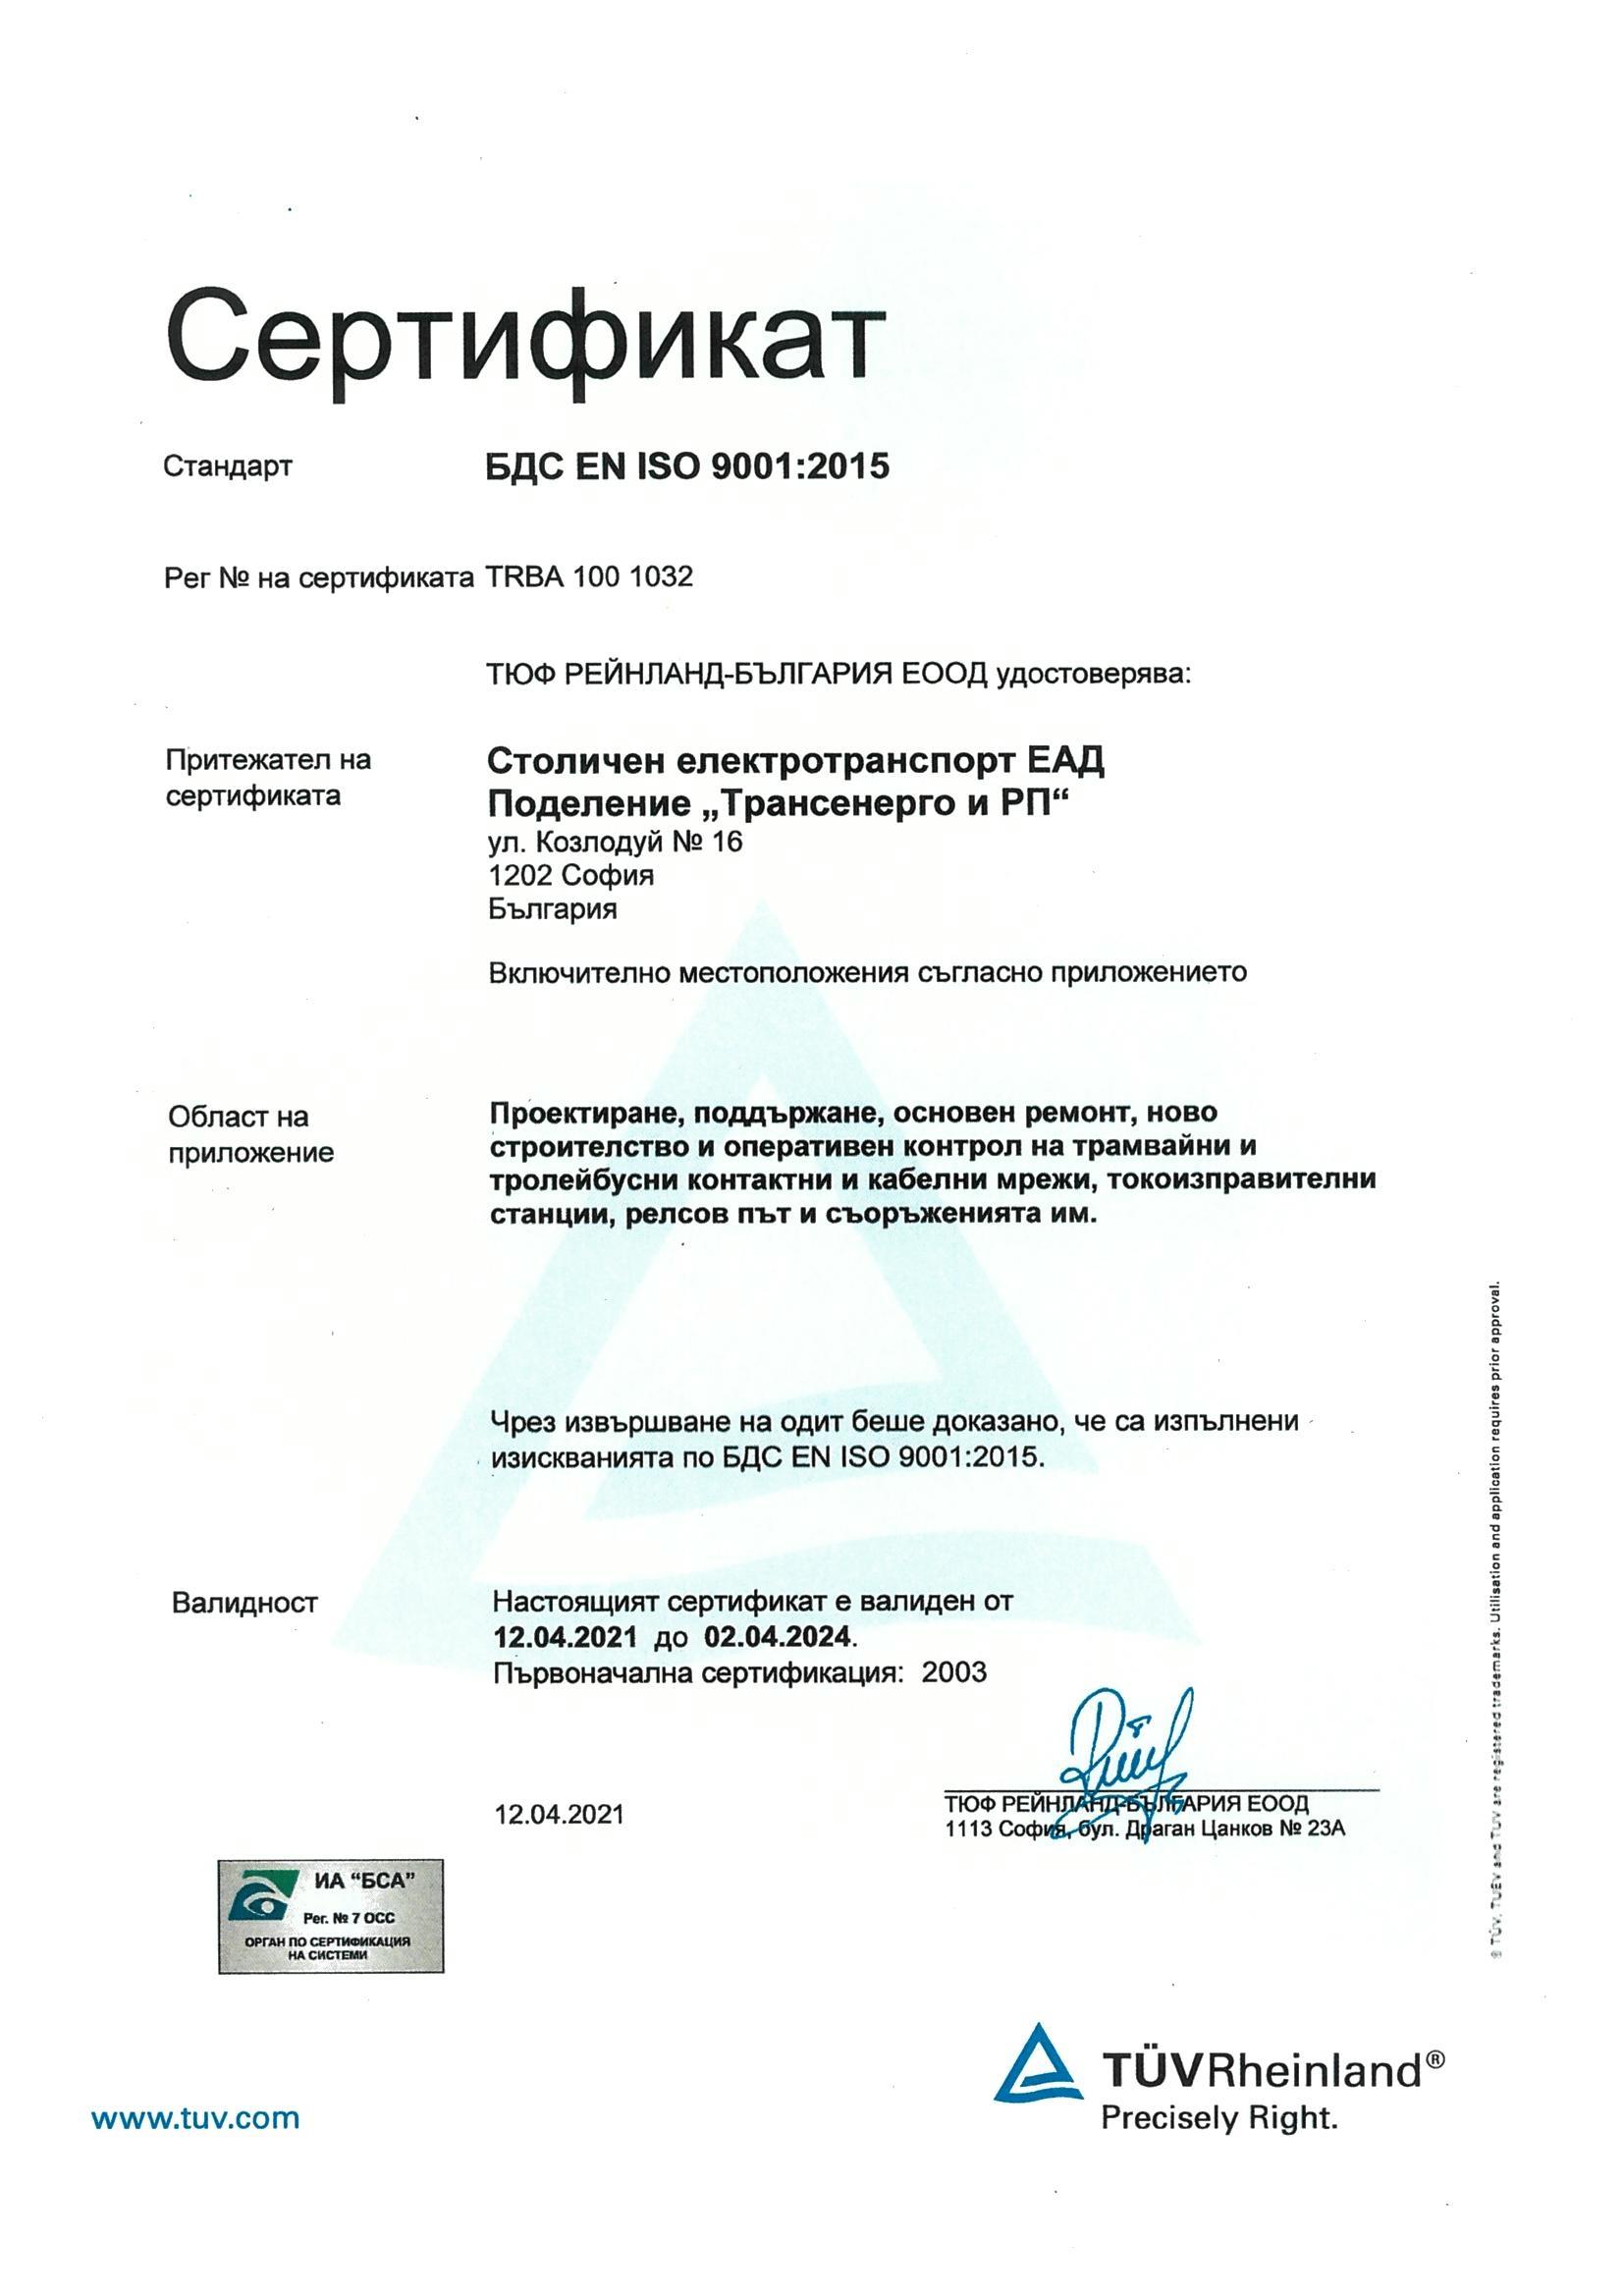 Sertificate ISO 9001:2008